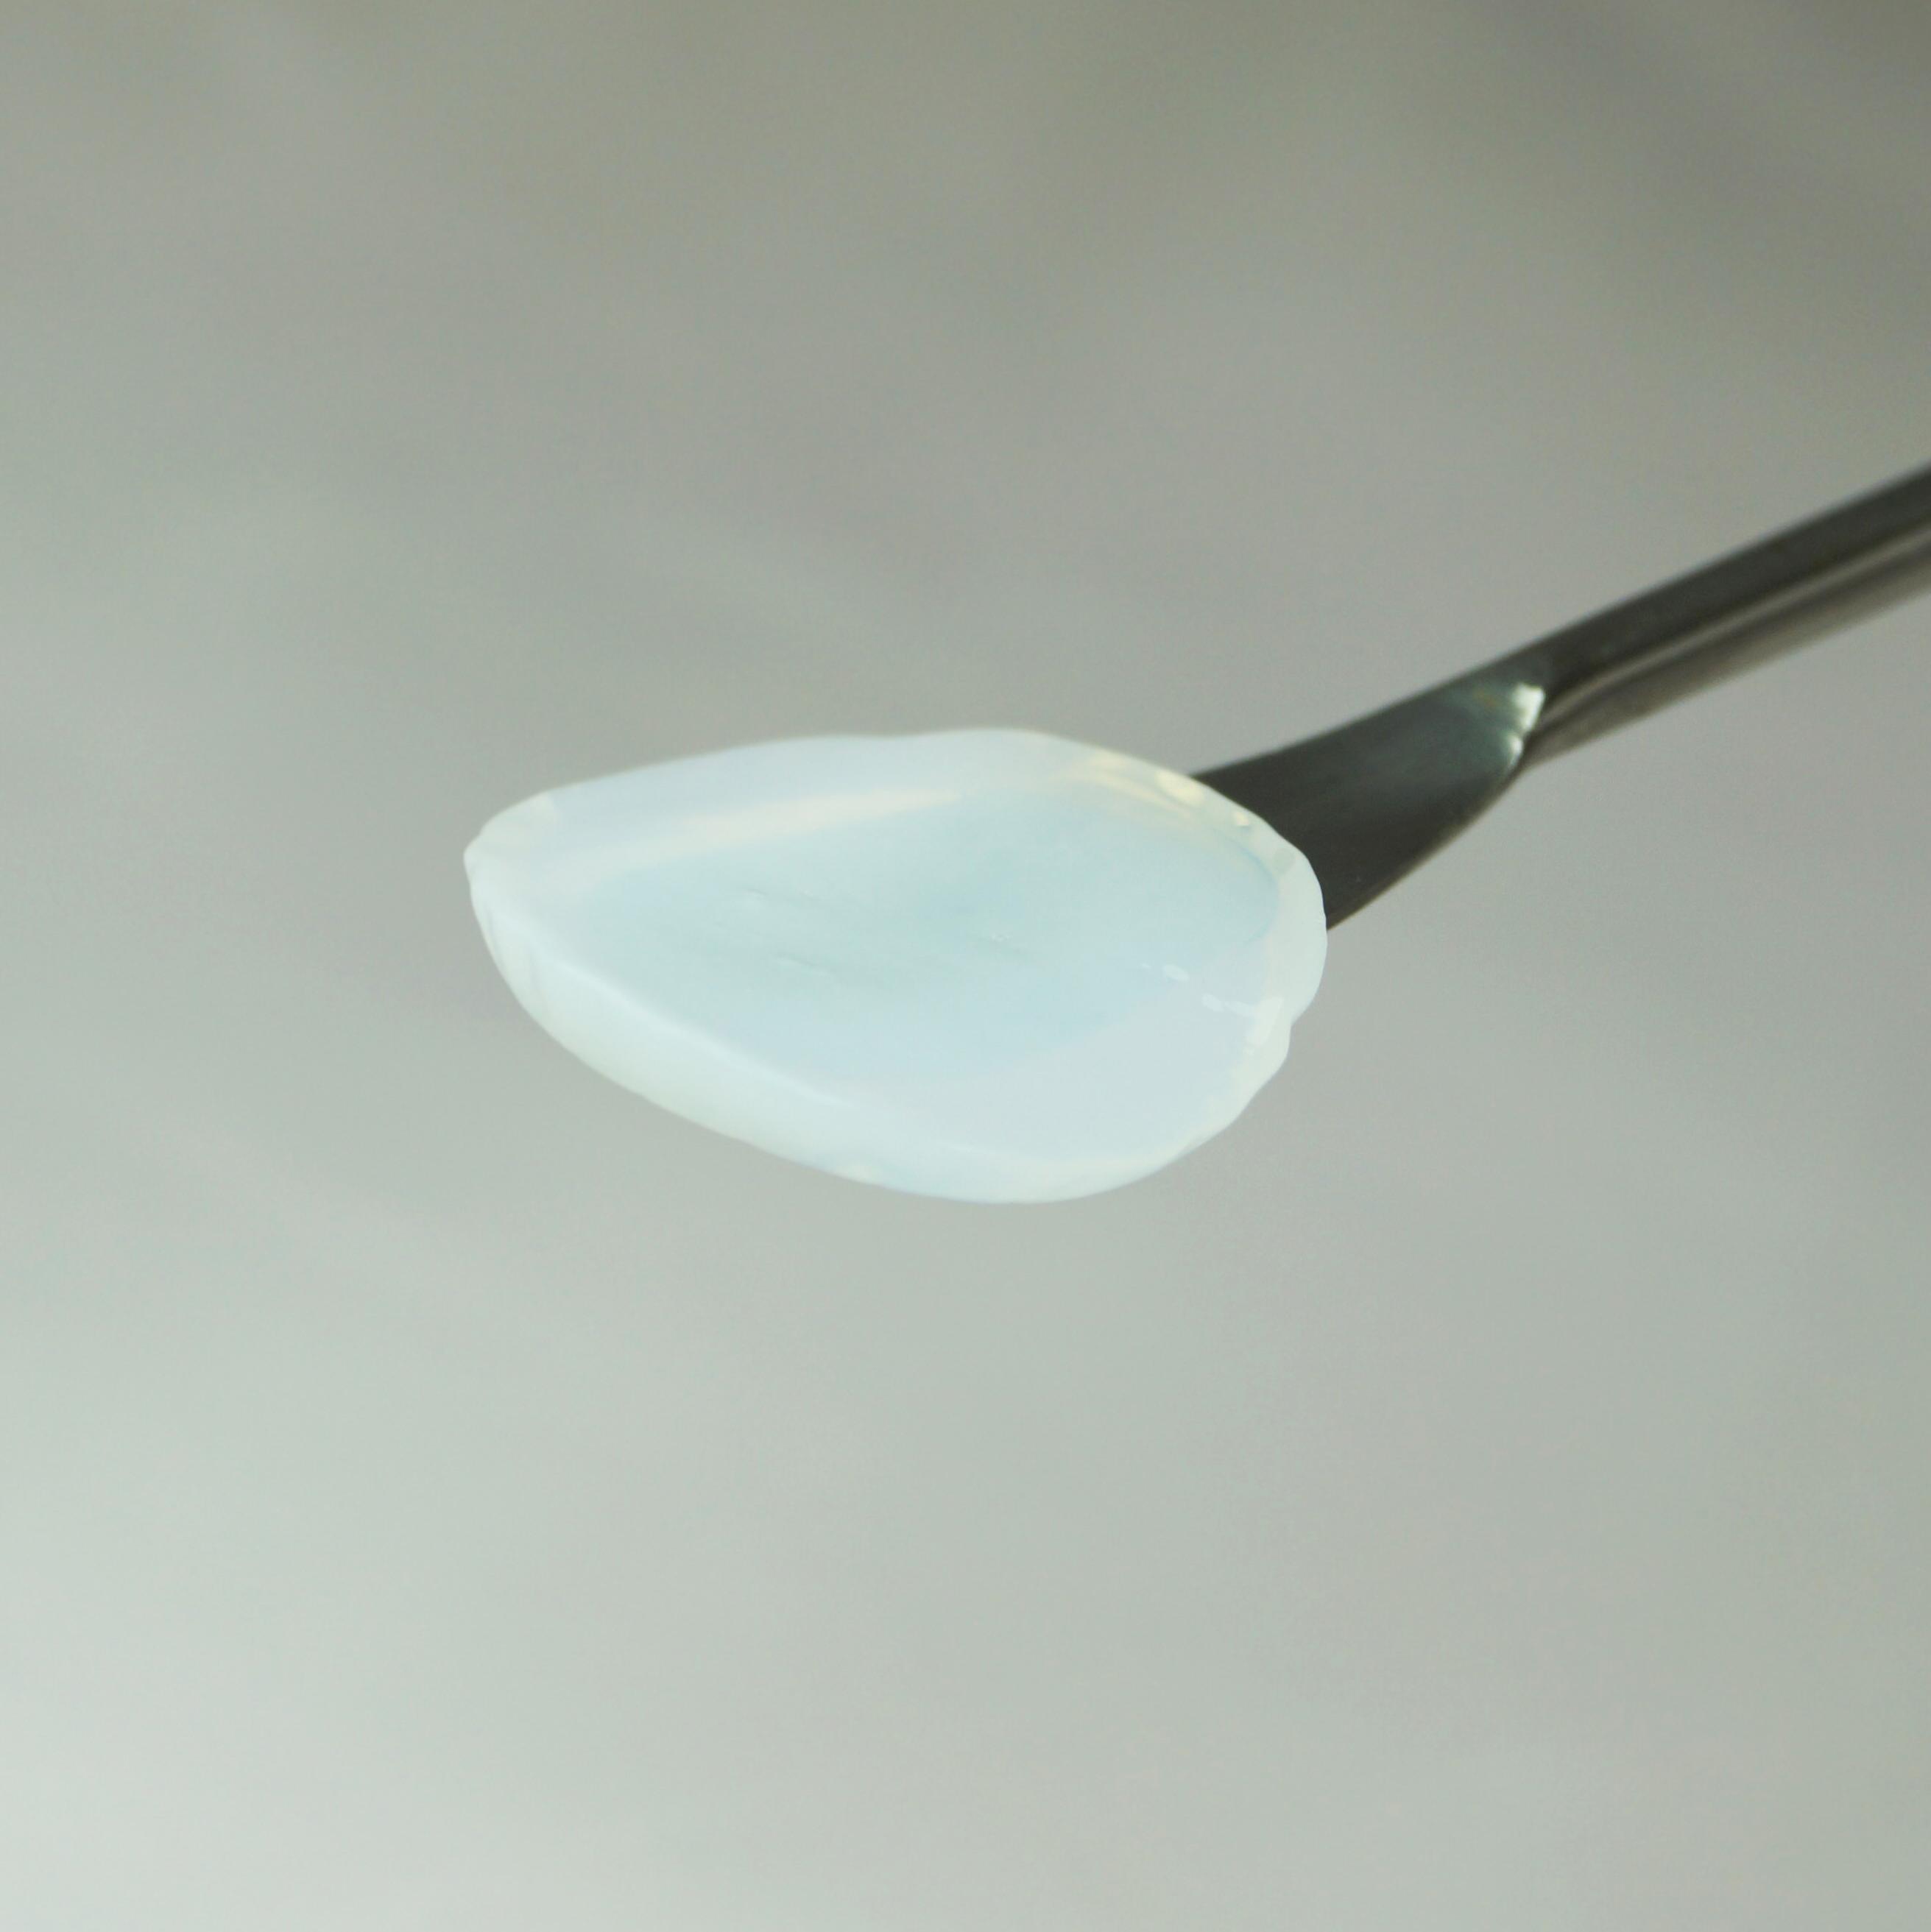 PhotoCol ColMa methacrylated collagen 3D hydrogel